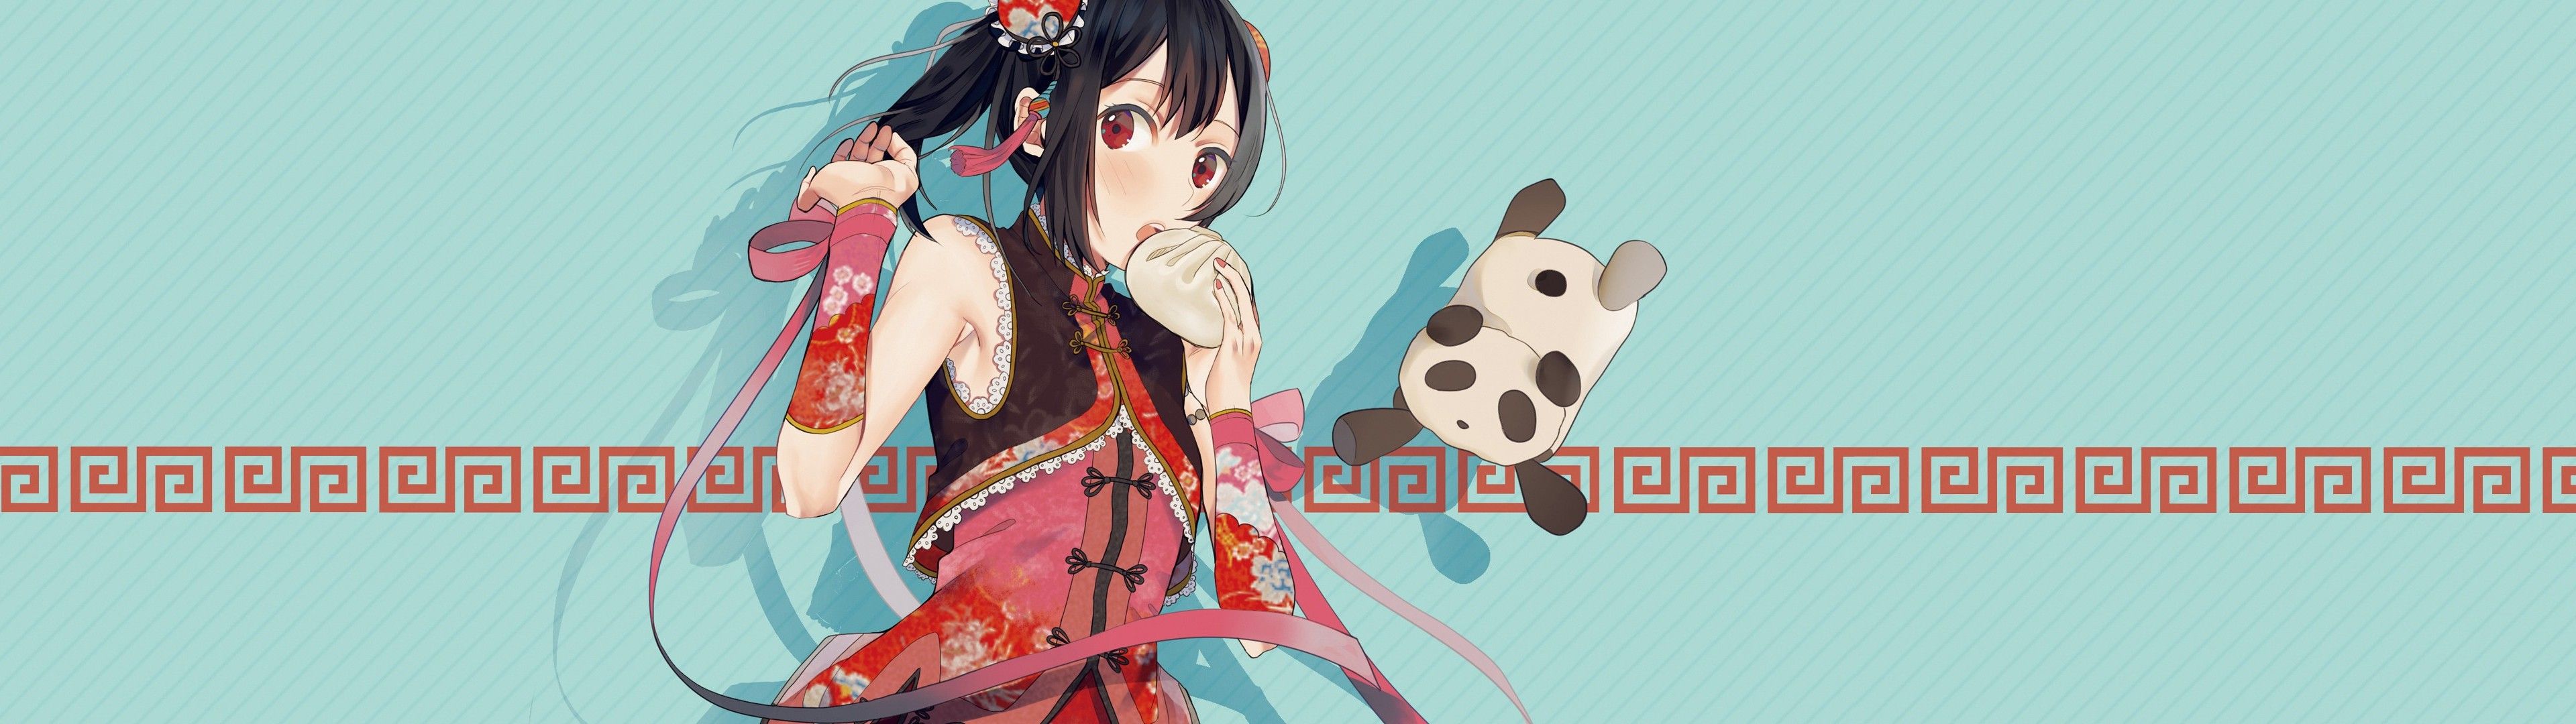 #panda, #anime girls, #Chinese dress wallpaper. Anime